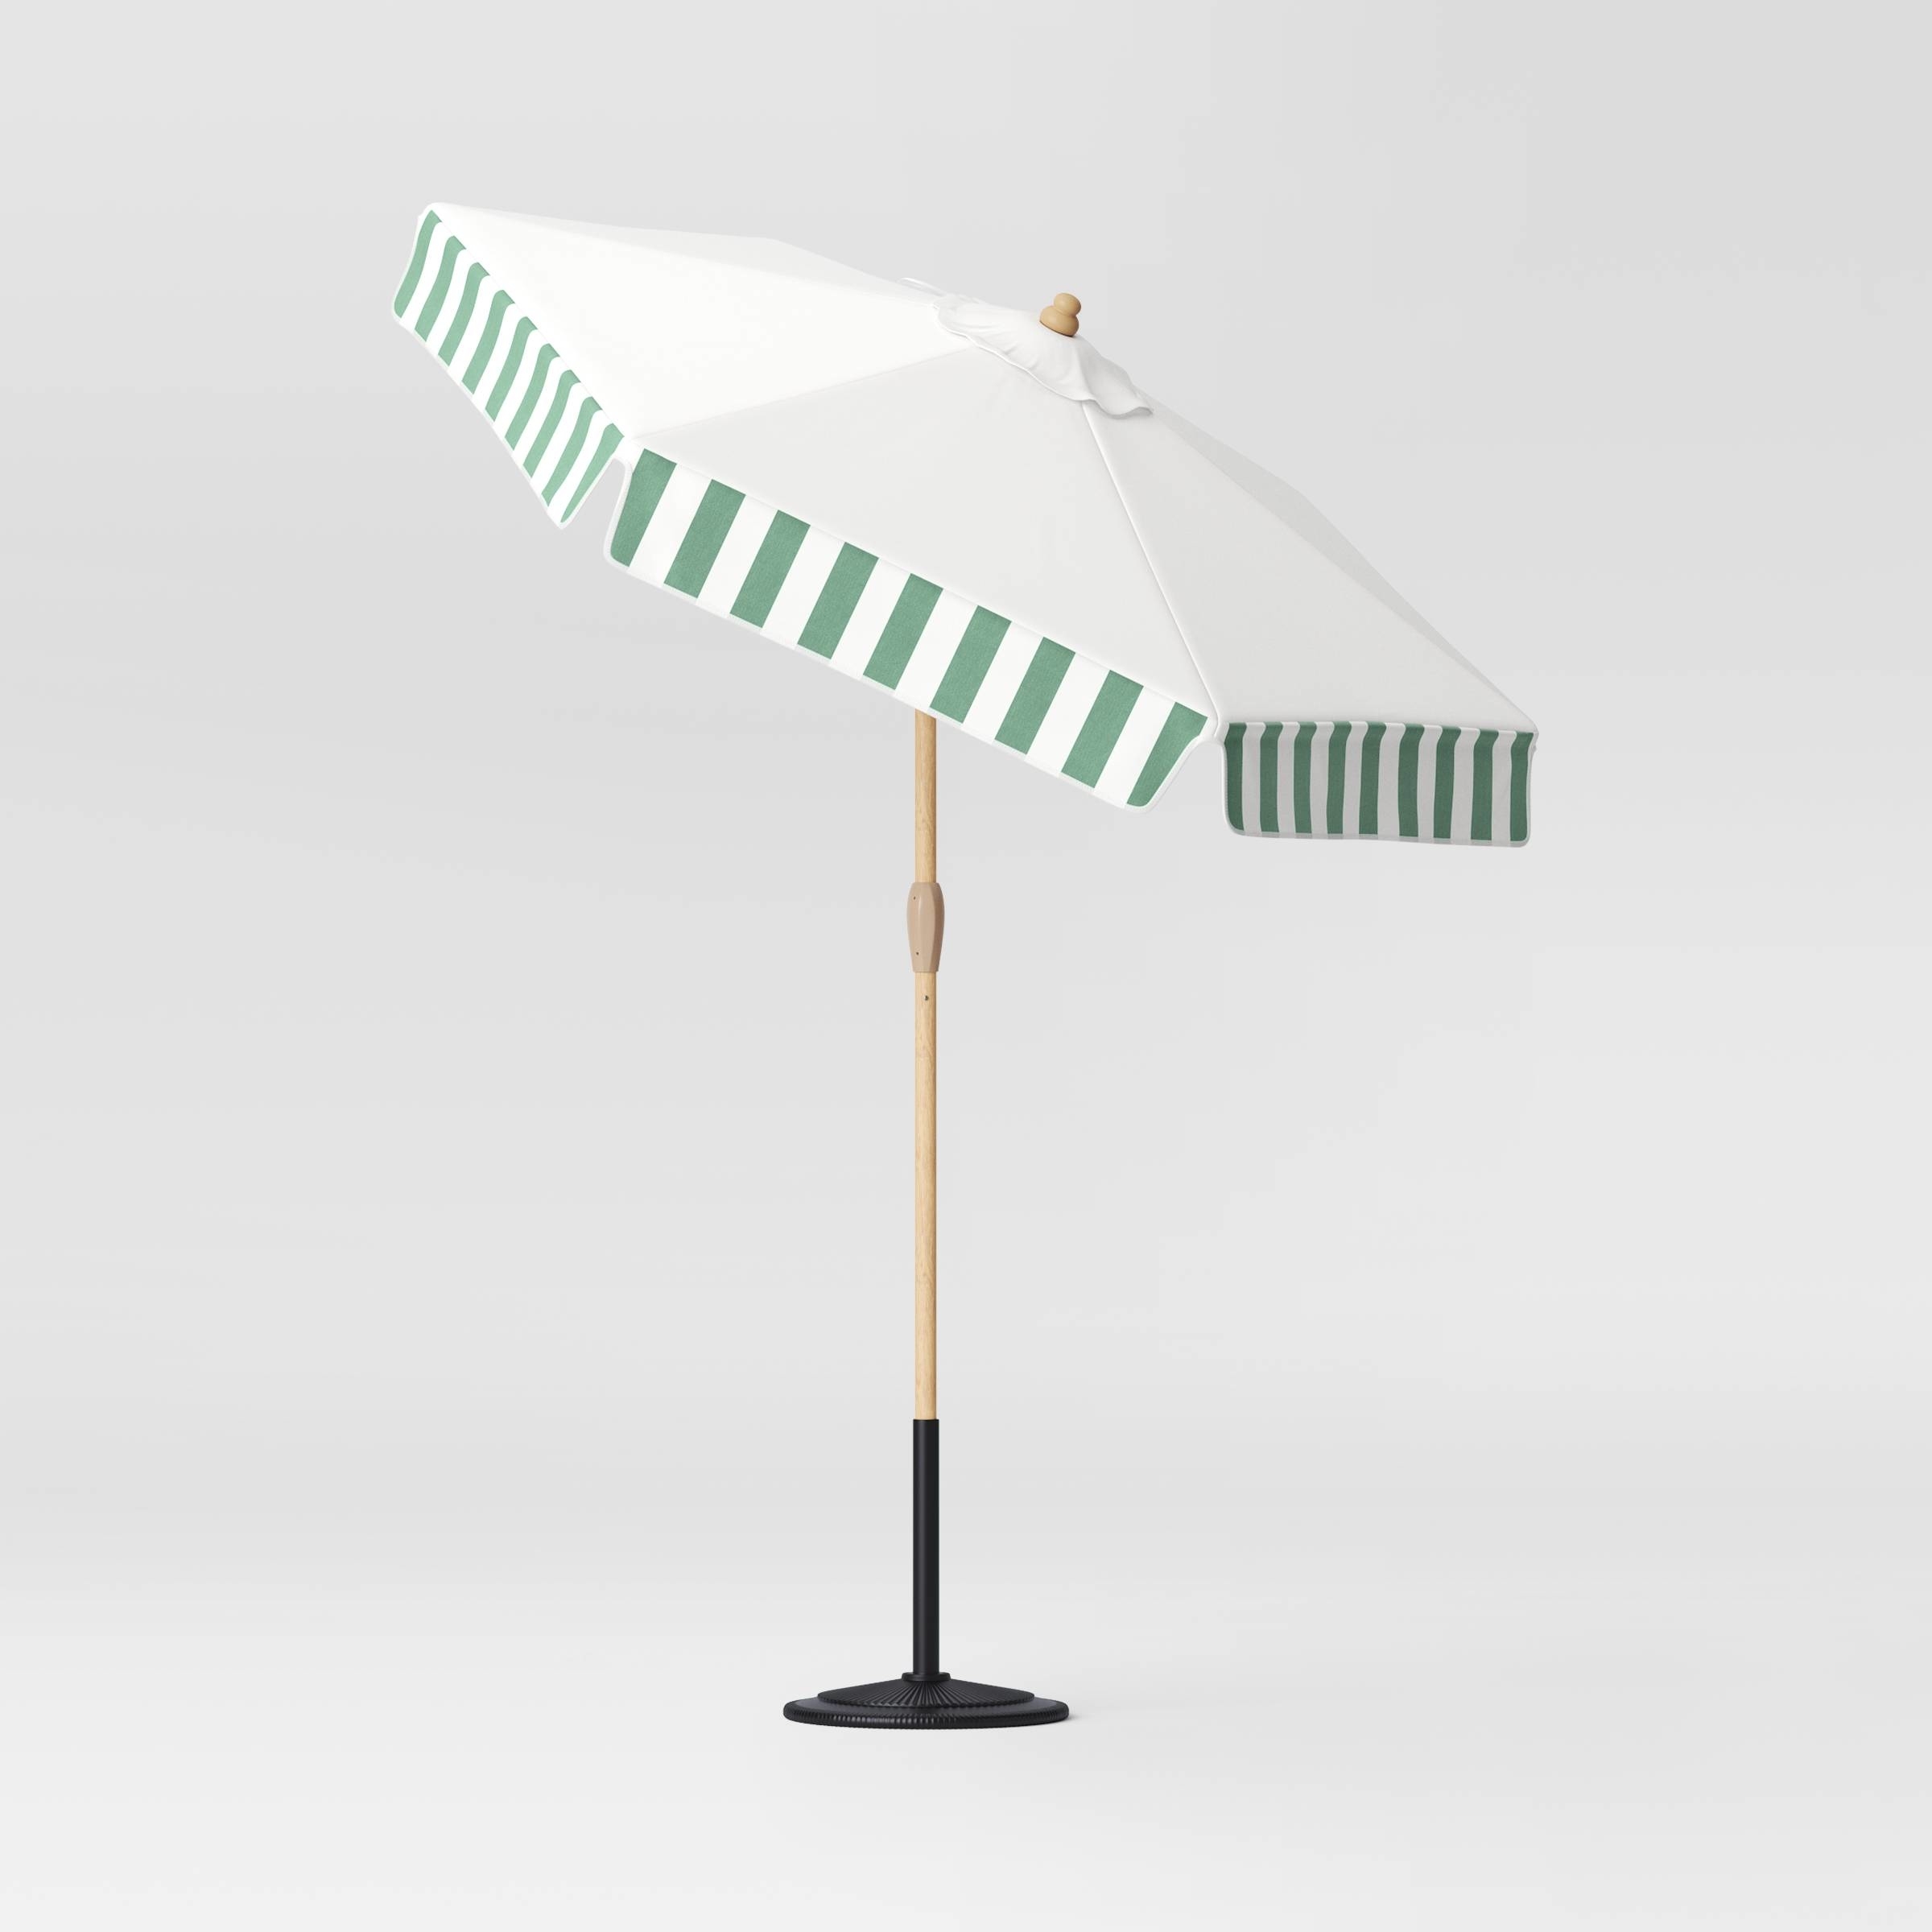 A white patio umbrella with green stripes on a plain background